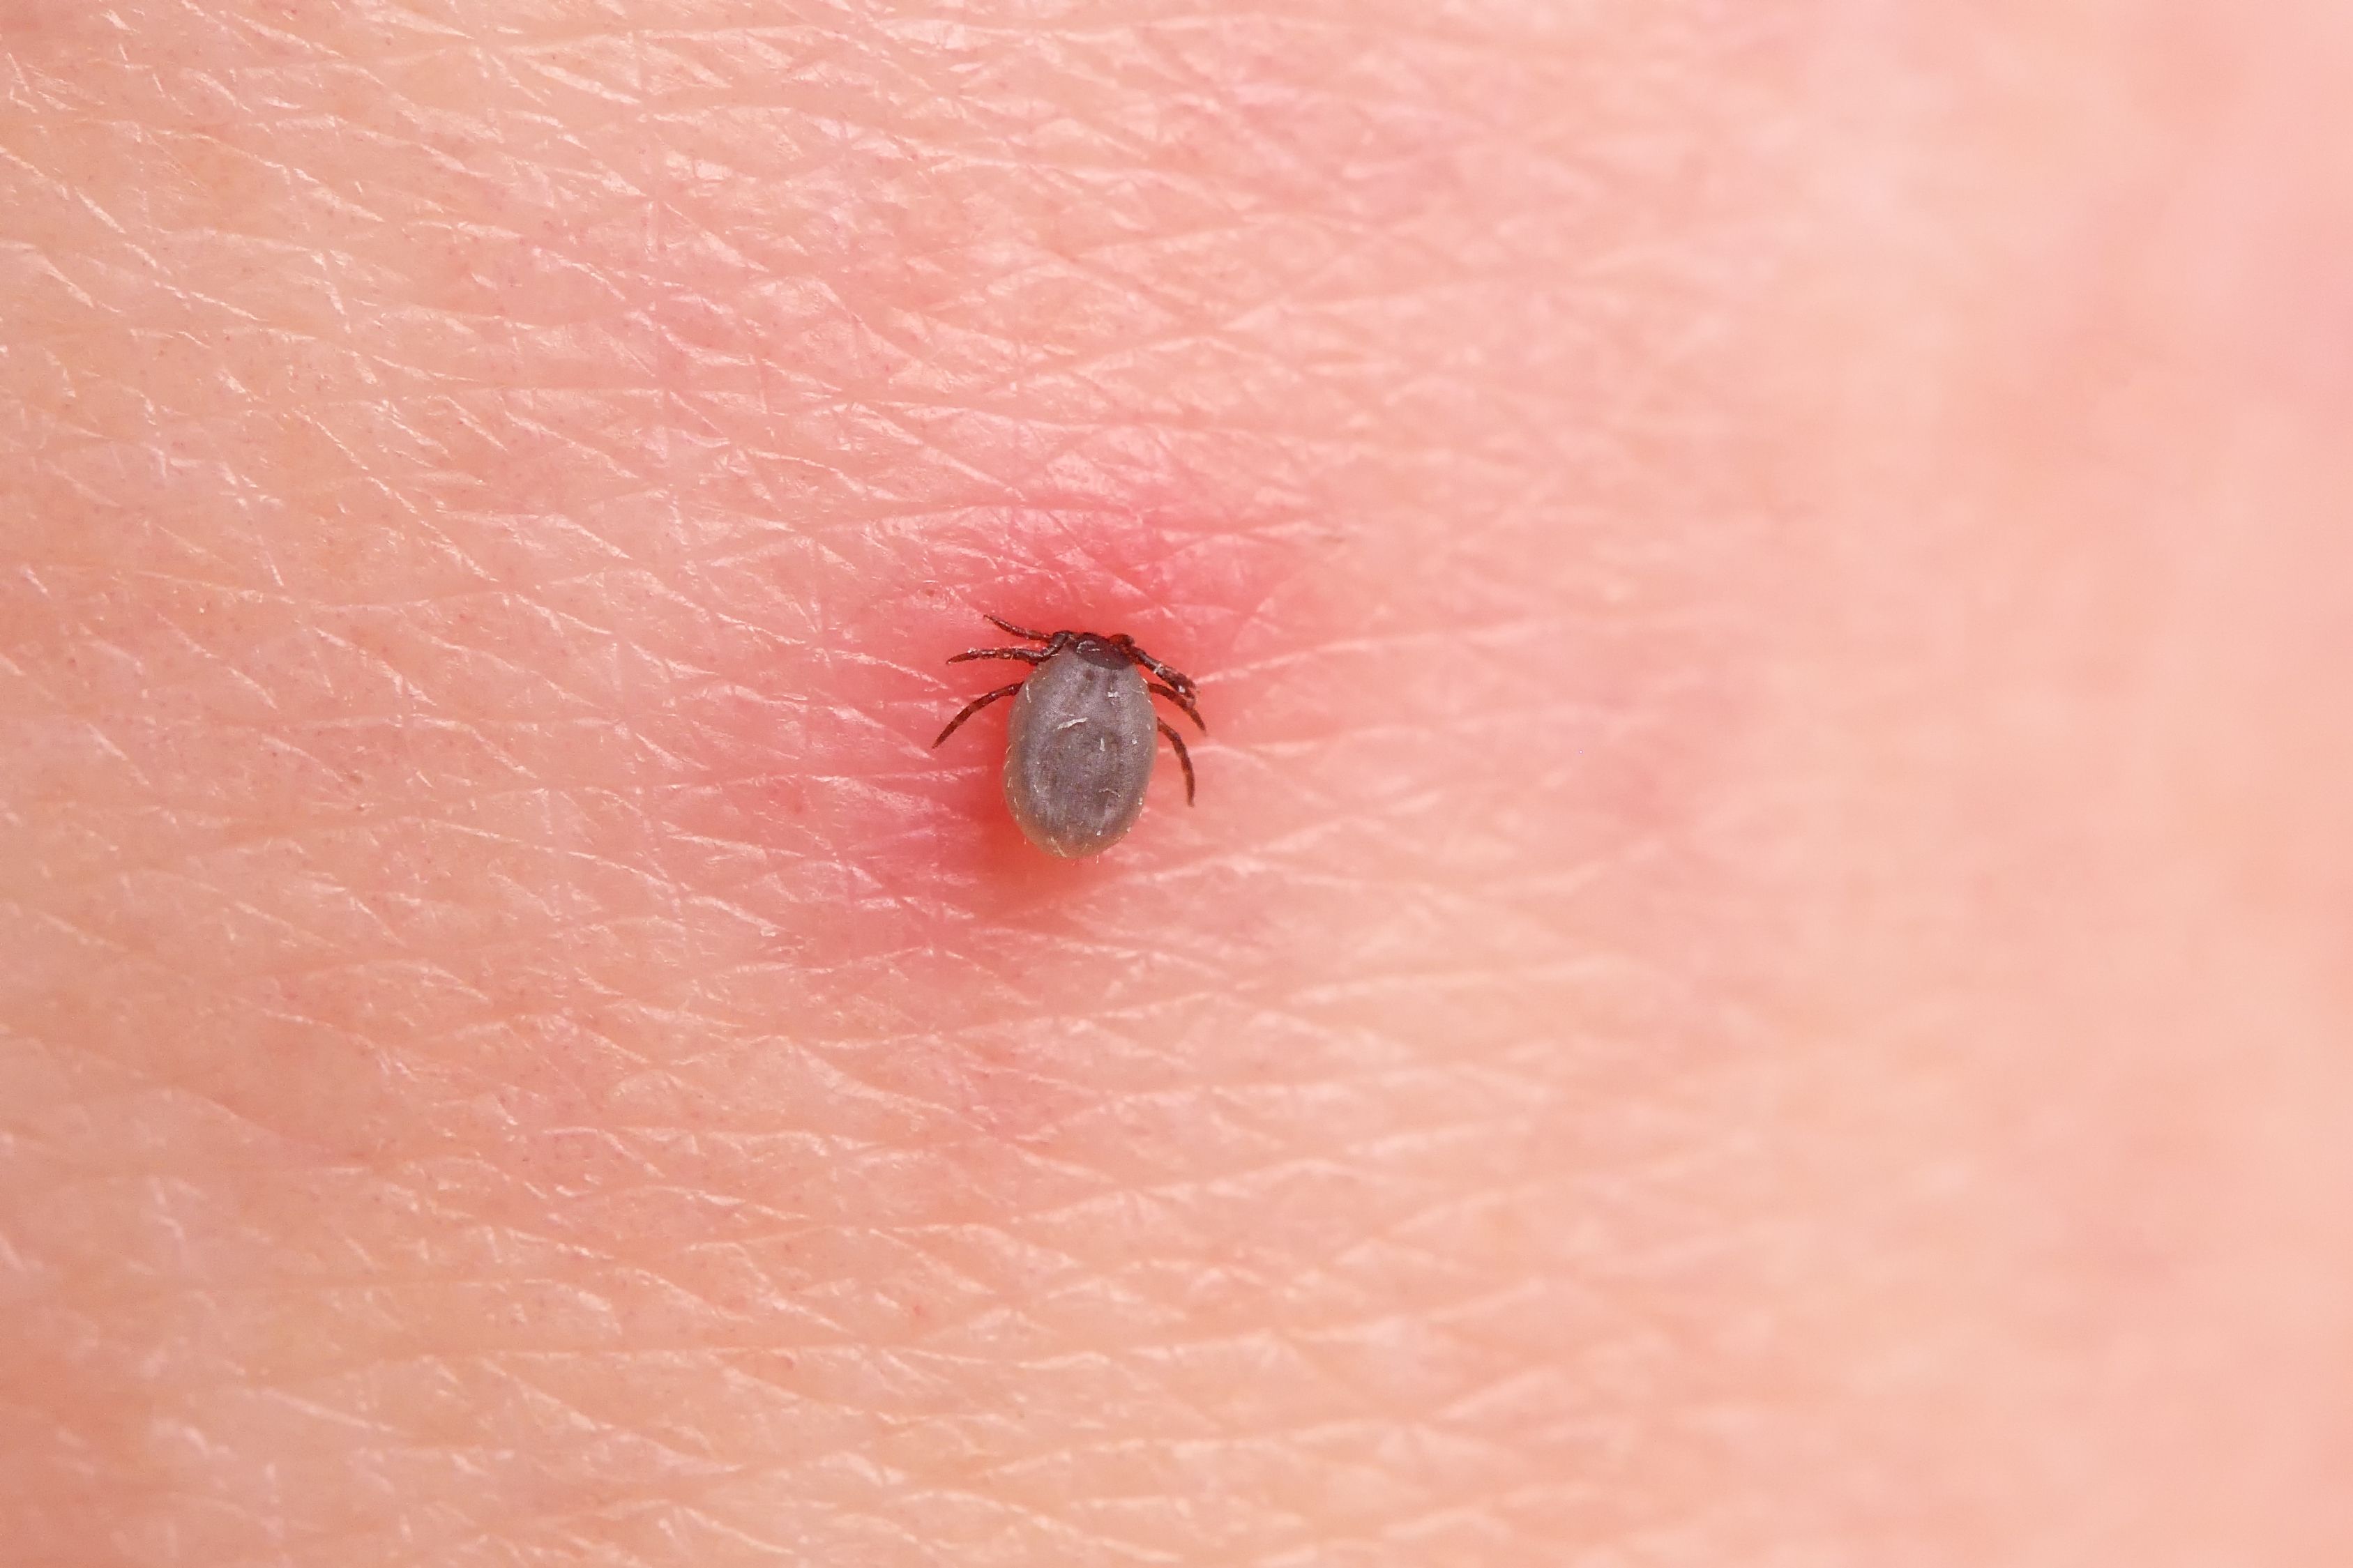 Tick bites - symptoms, treatments and prevention